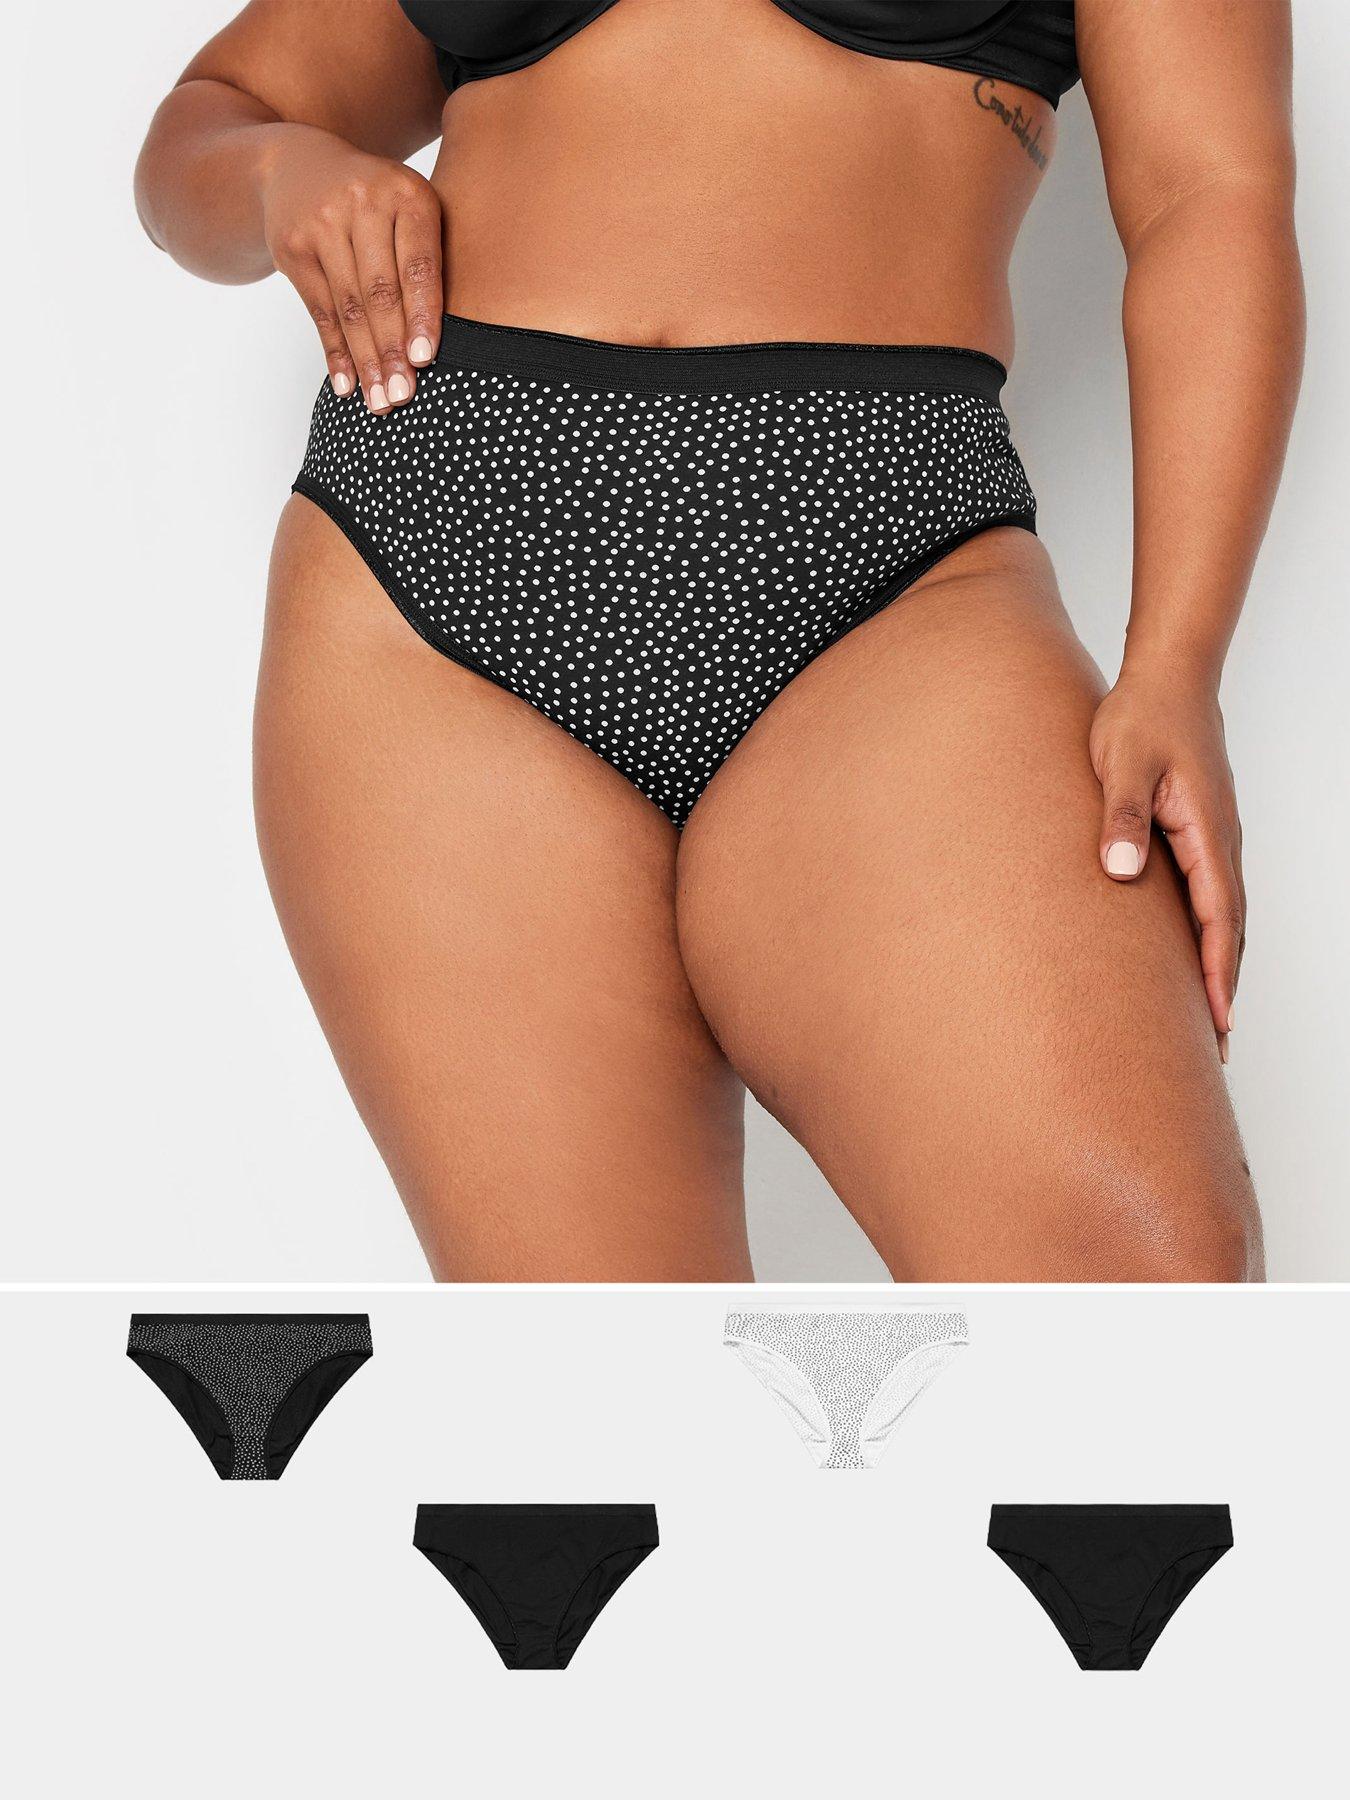 50 Pecs Sexy Underwear 100% Cotton Beading Panties Bikini Thong G String T  Back Panties Briefs Ladies Women Lingerie Intimate From 0,32 €